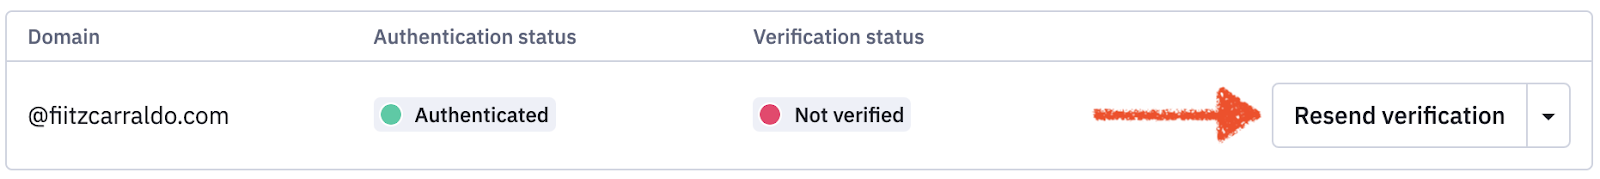 Resend Verification button.png